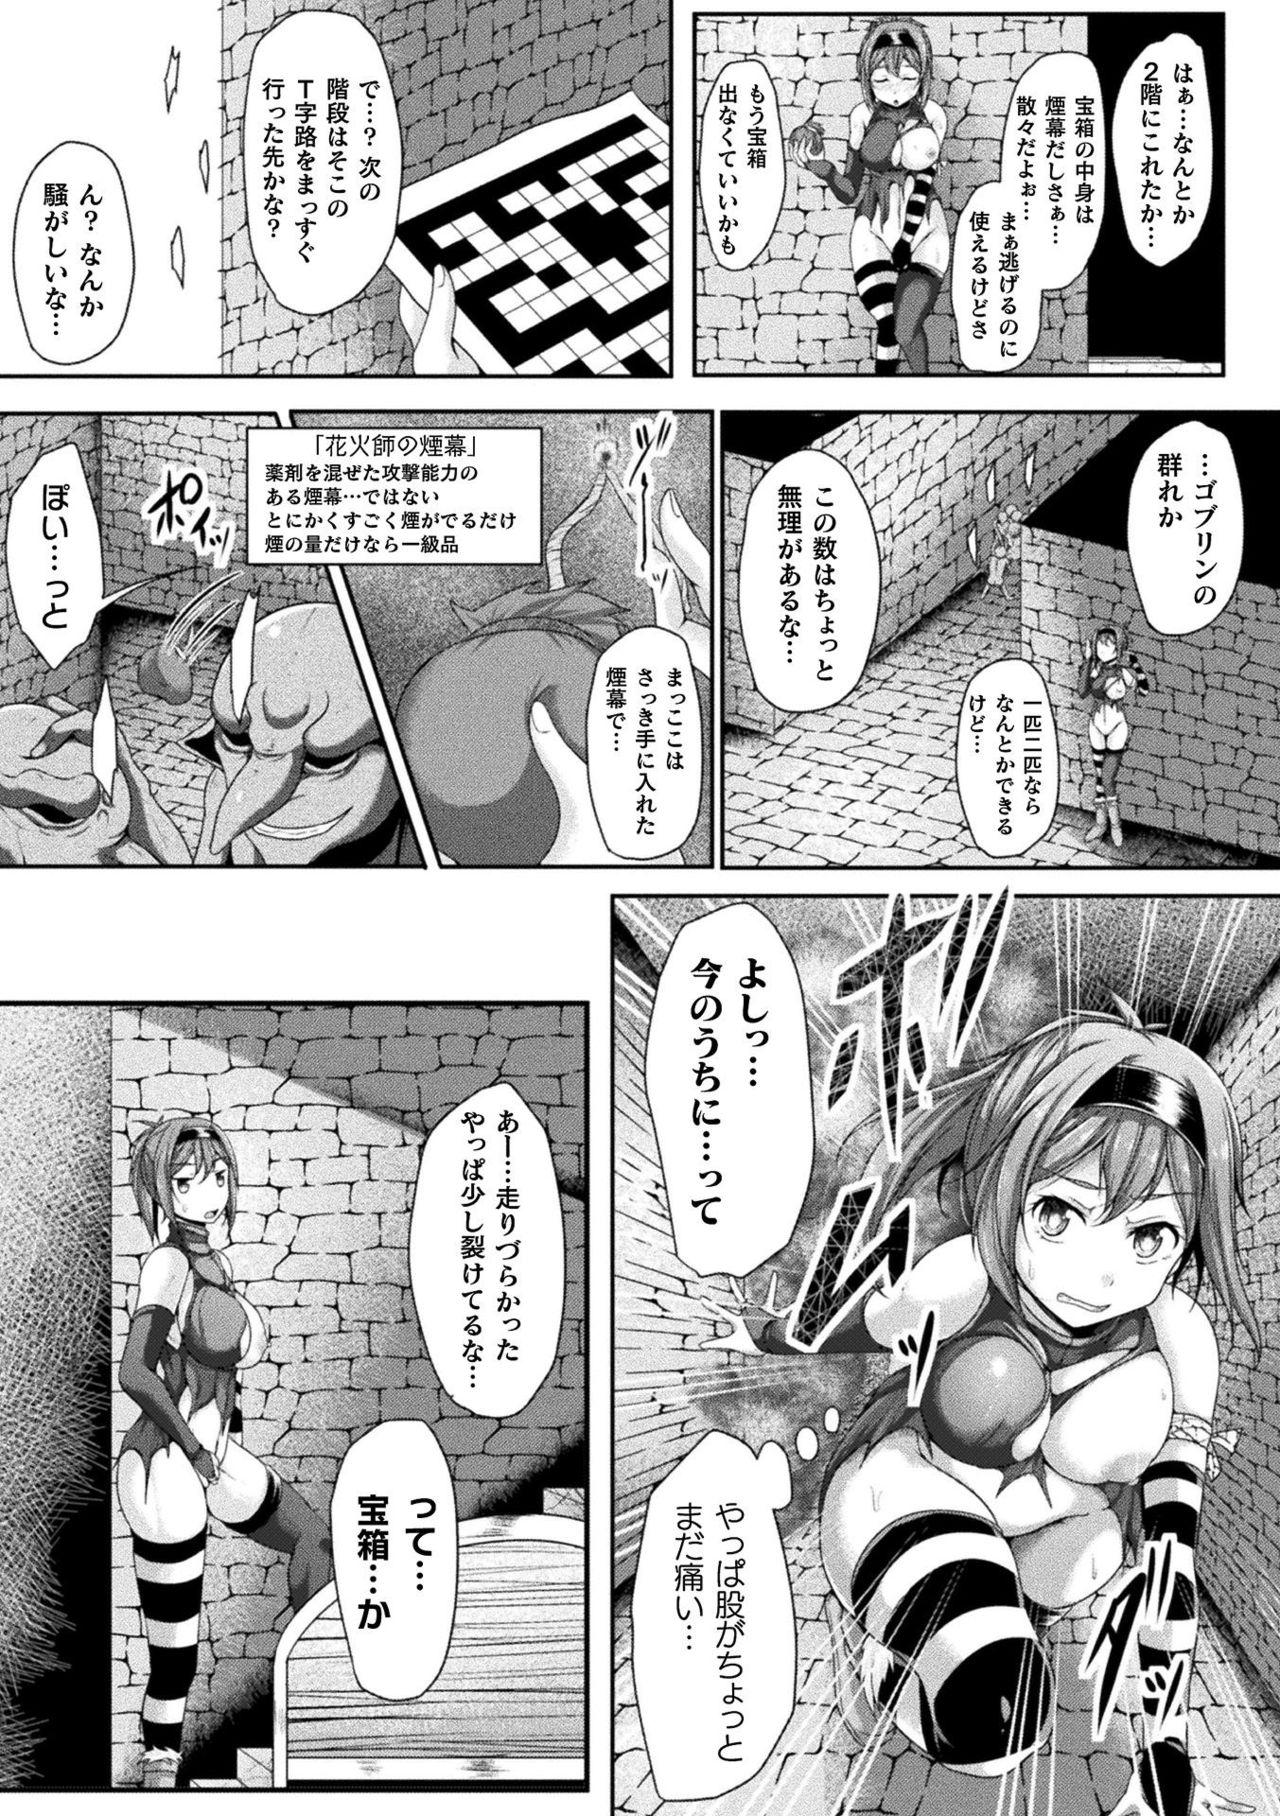 2D Comic Magazine Zecchou Kairaku ga Tomaranai Ero-Trap Dungeon Vol. 1 76